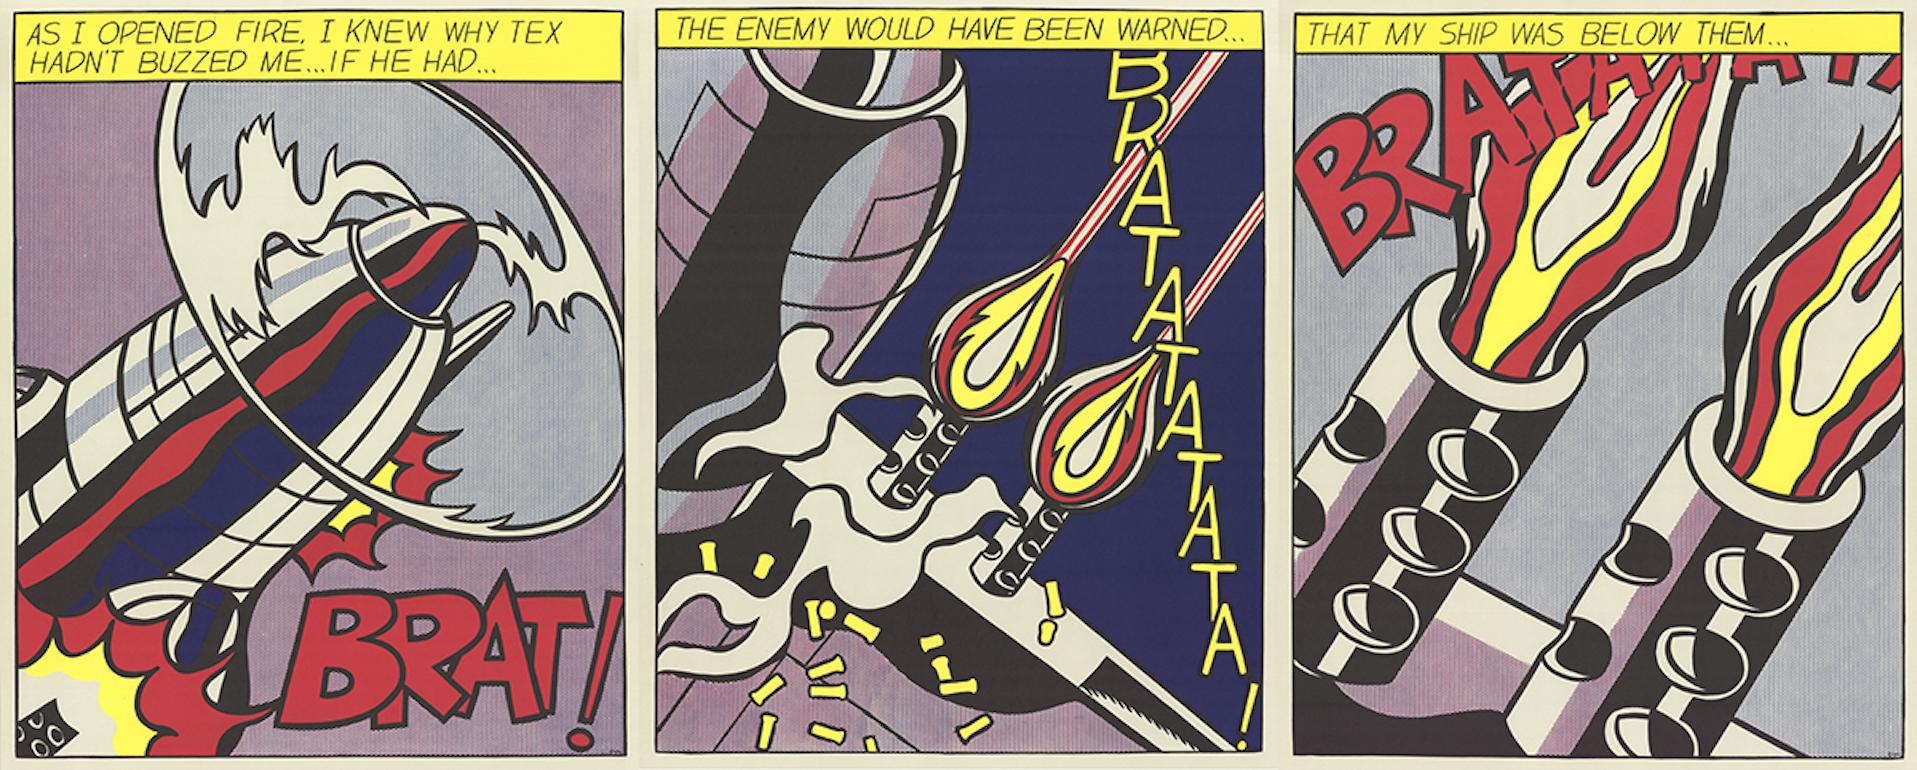 Roy Lichtenstein-As I Opened Fire (Triptych)-FOURTH EDITION